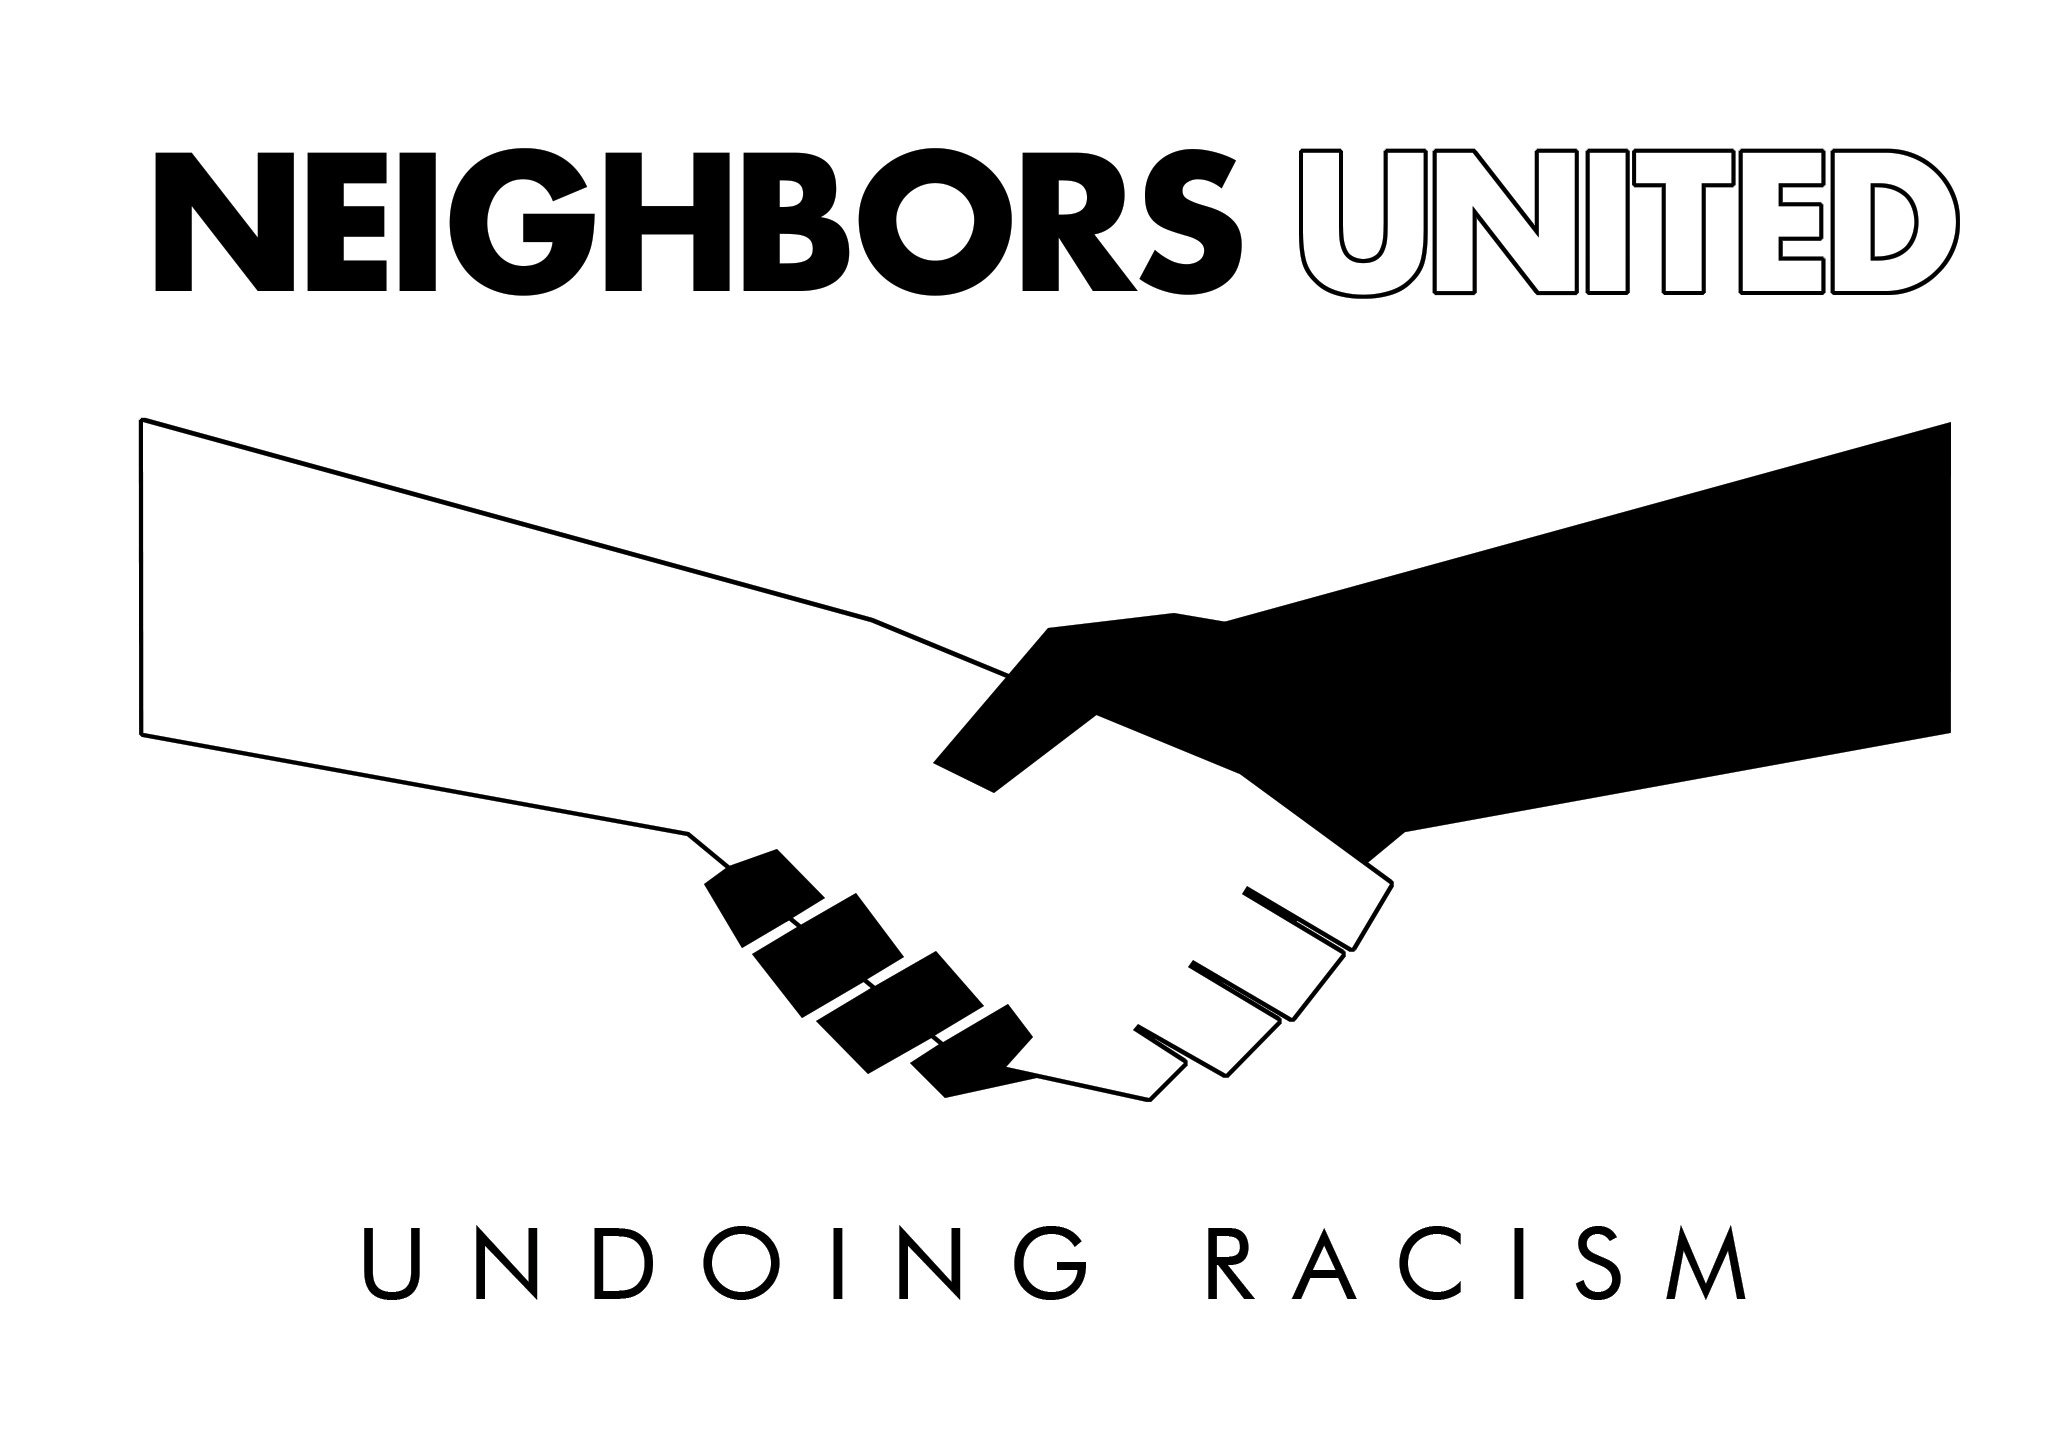 Neighbors United Against Racism